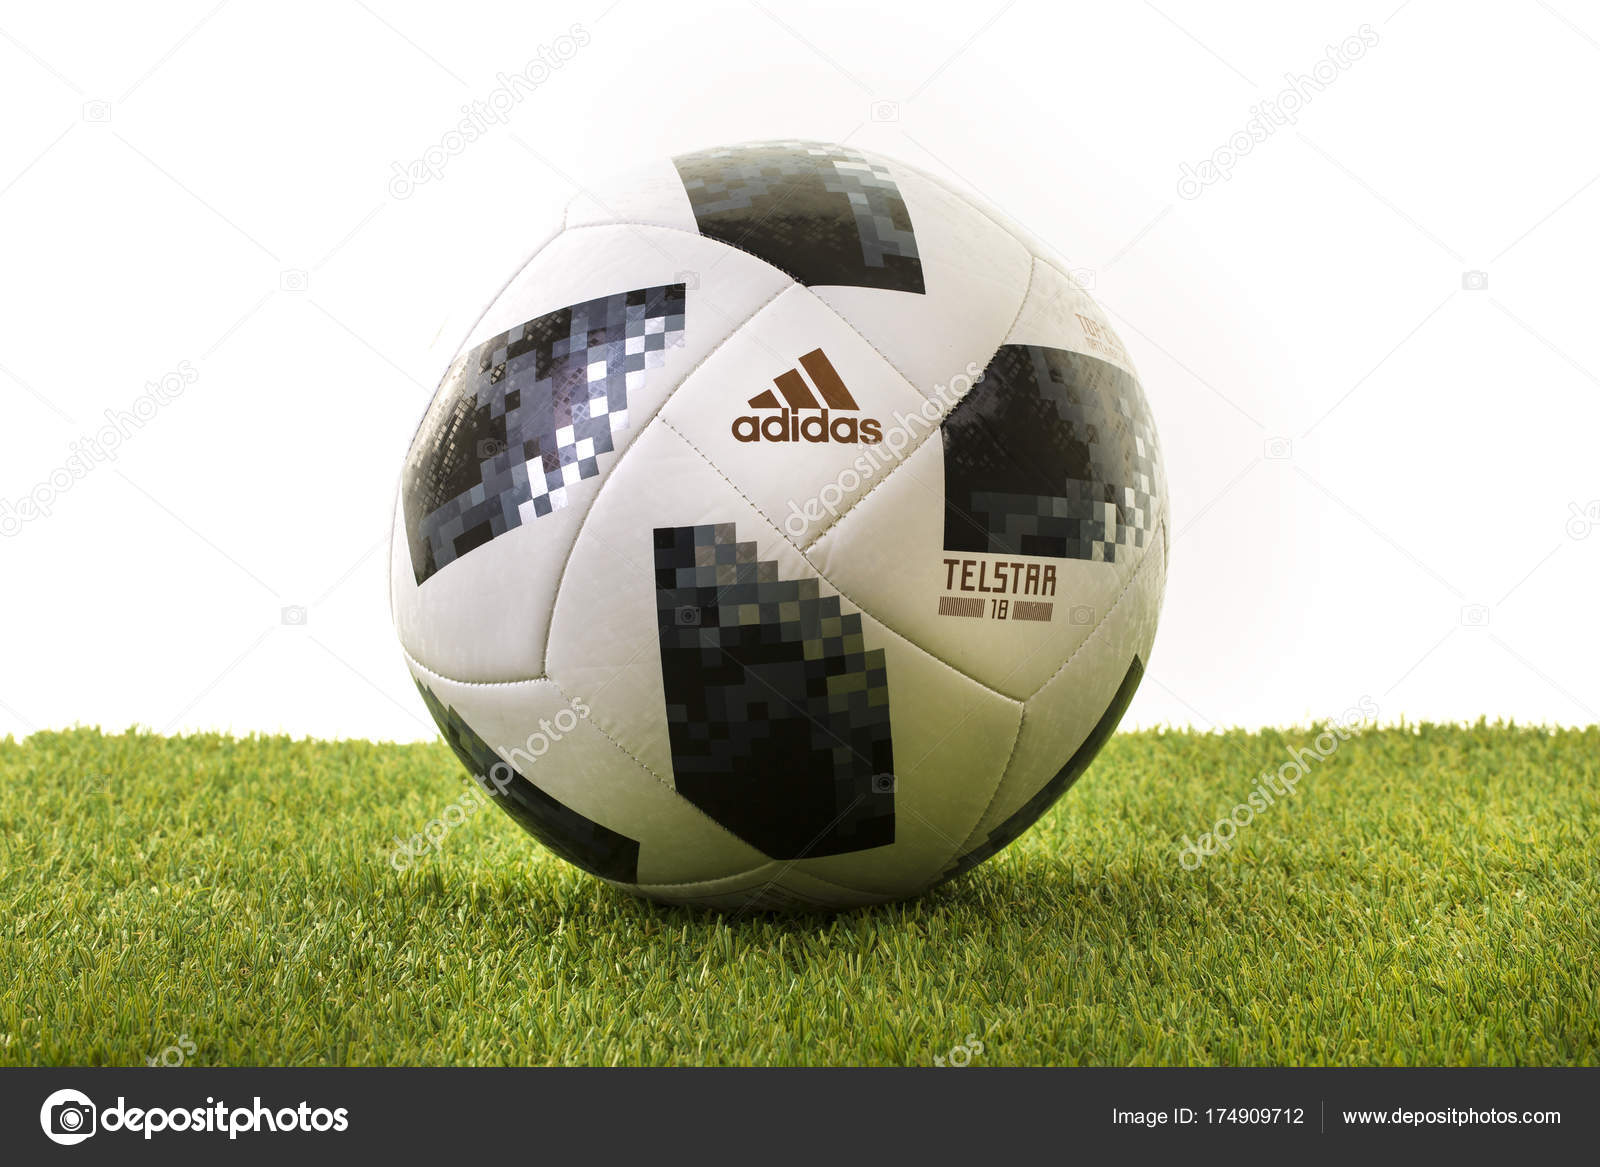 https://st3.depositphotos.com/1008960/17490/i/1600/depositphotos_174909712-stock-photo-adidas-brazuca-world-cup-2014.jpg